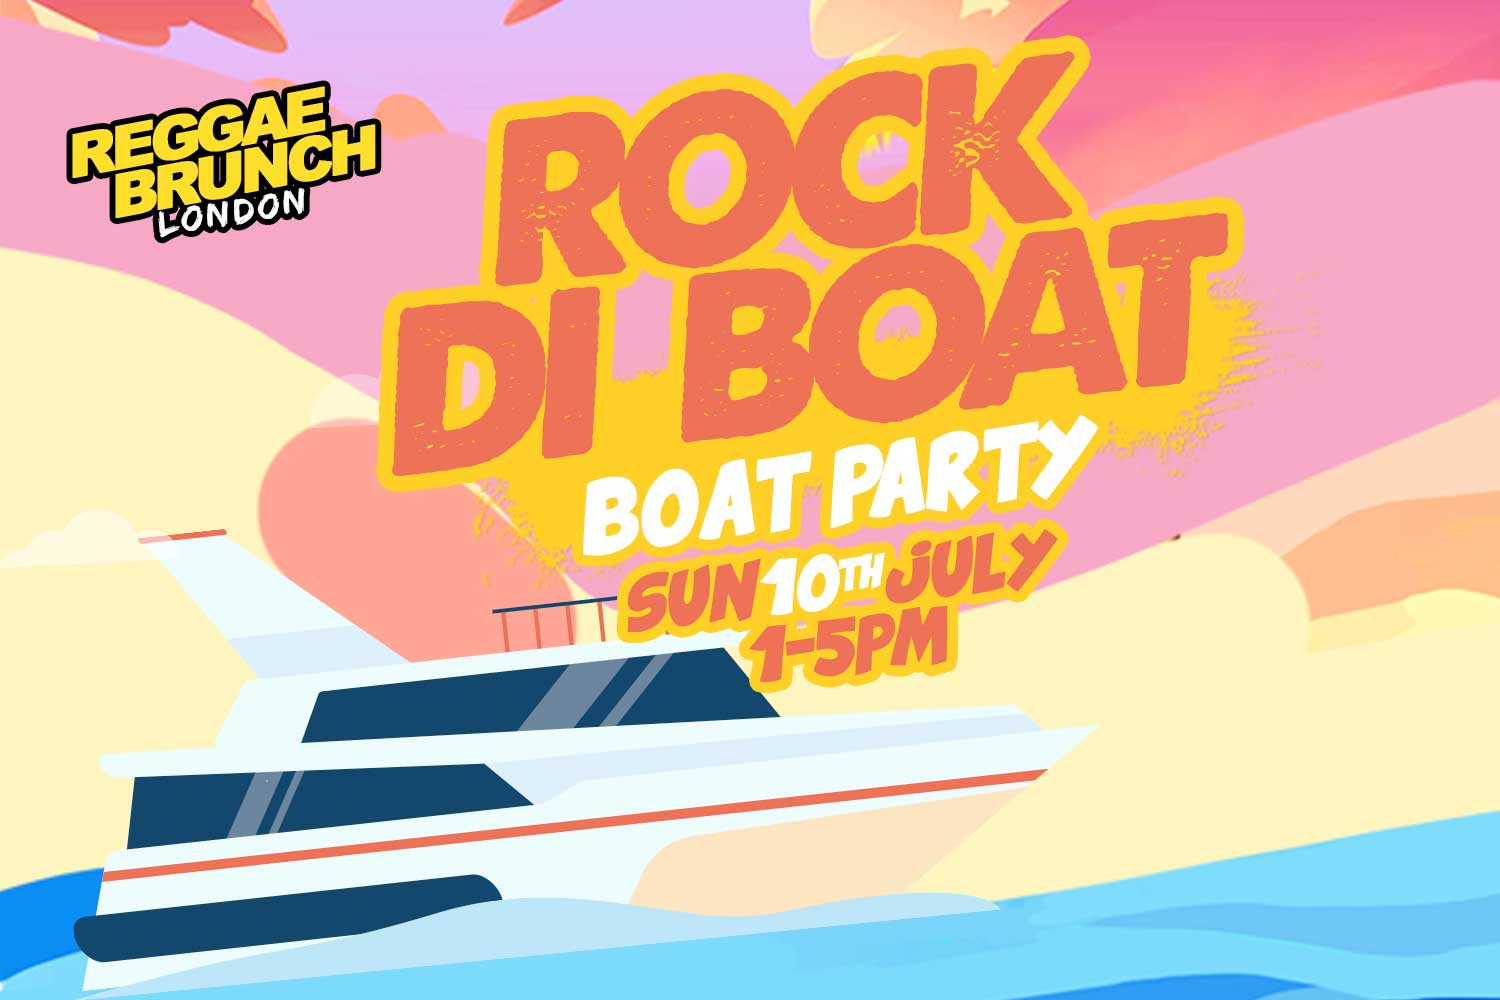 Sat, 10th July - Rock di boat